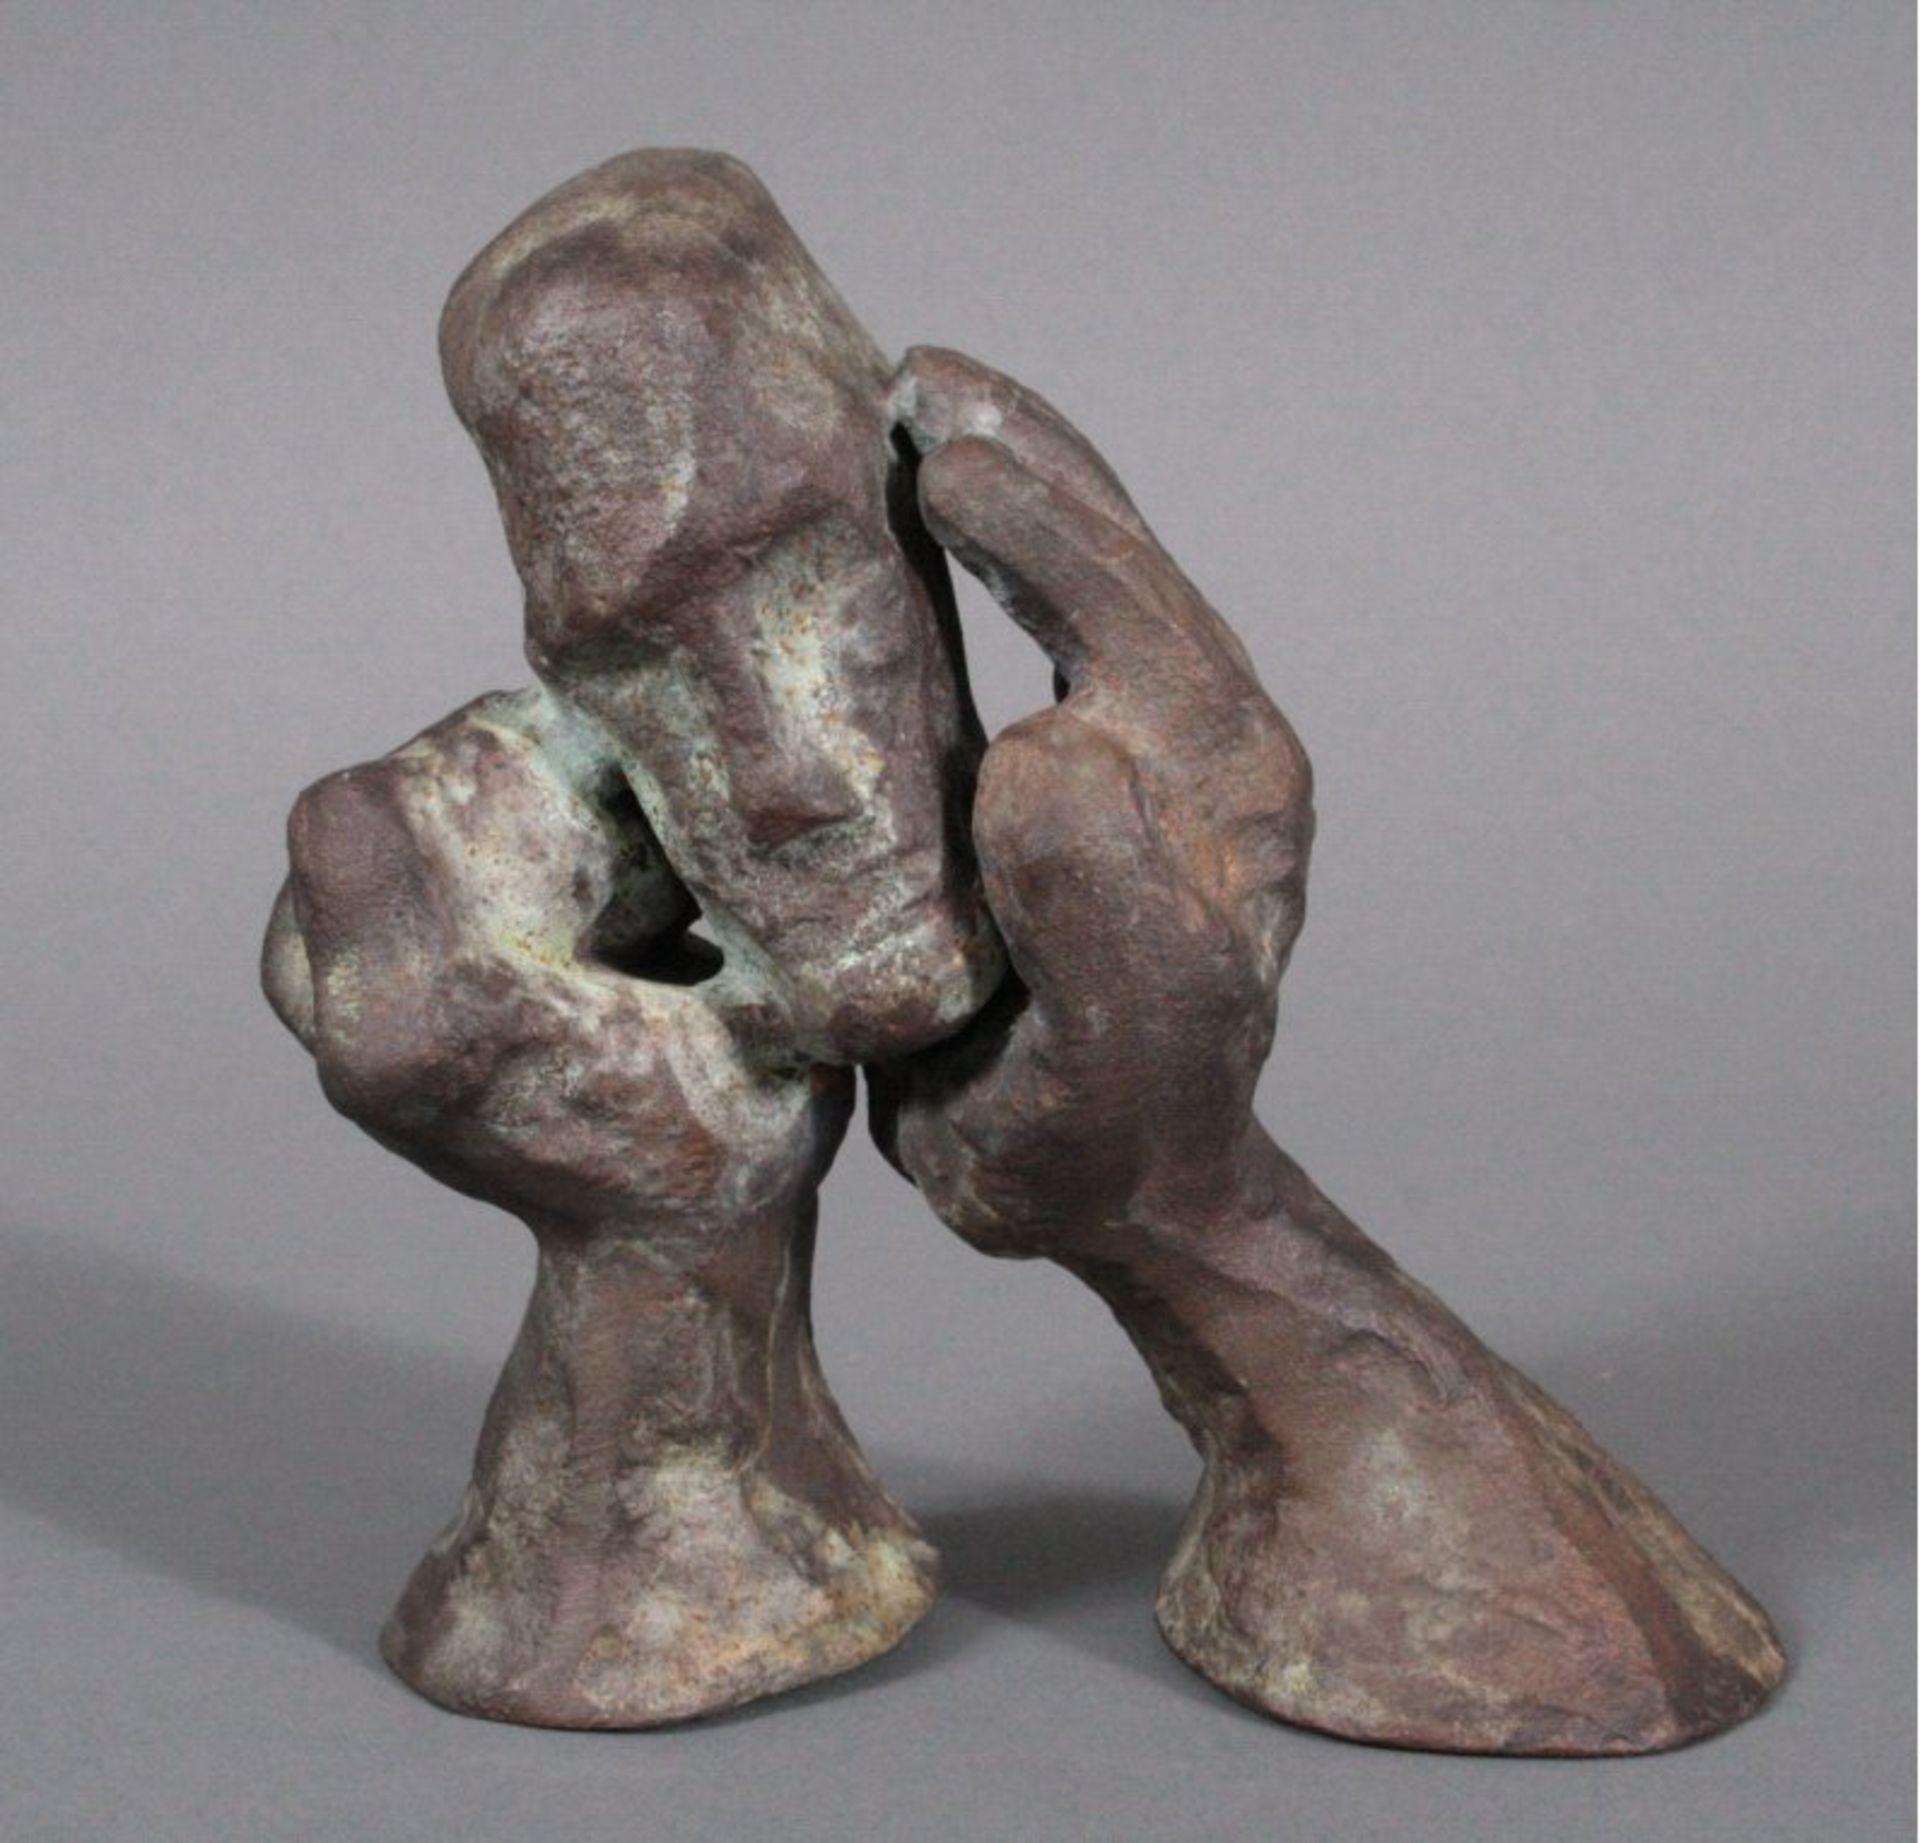 Dieter W. Meding (1942), Bronzeskulptur "Sentino"ca. 14,5x14x7 cm. - Image 2 of 3